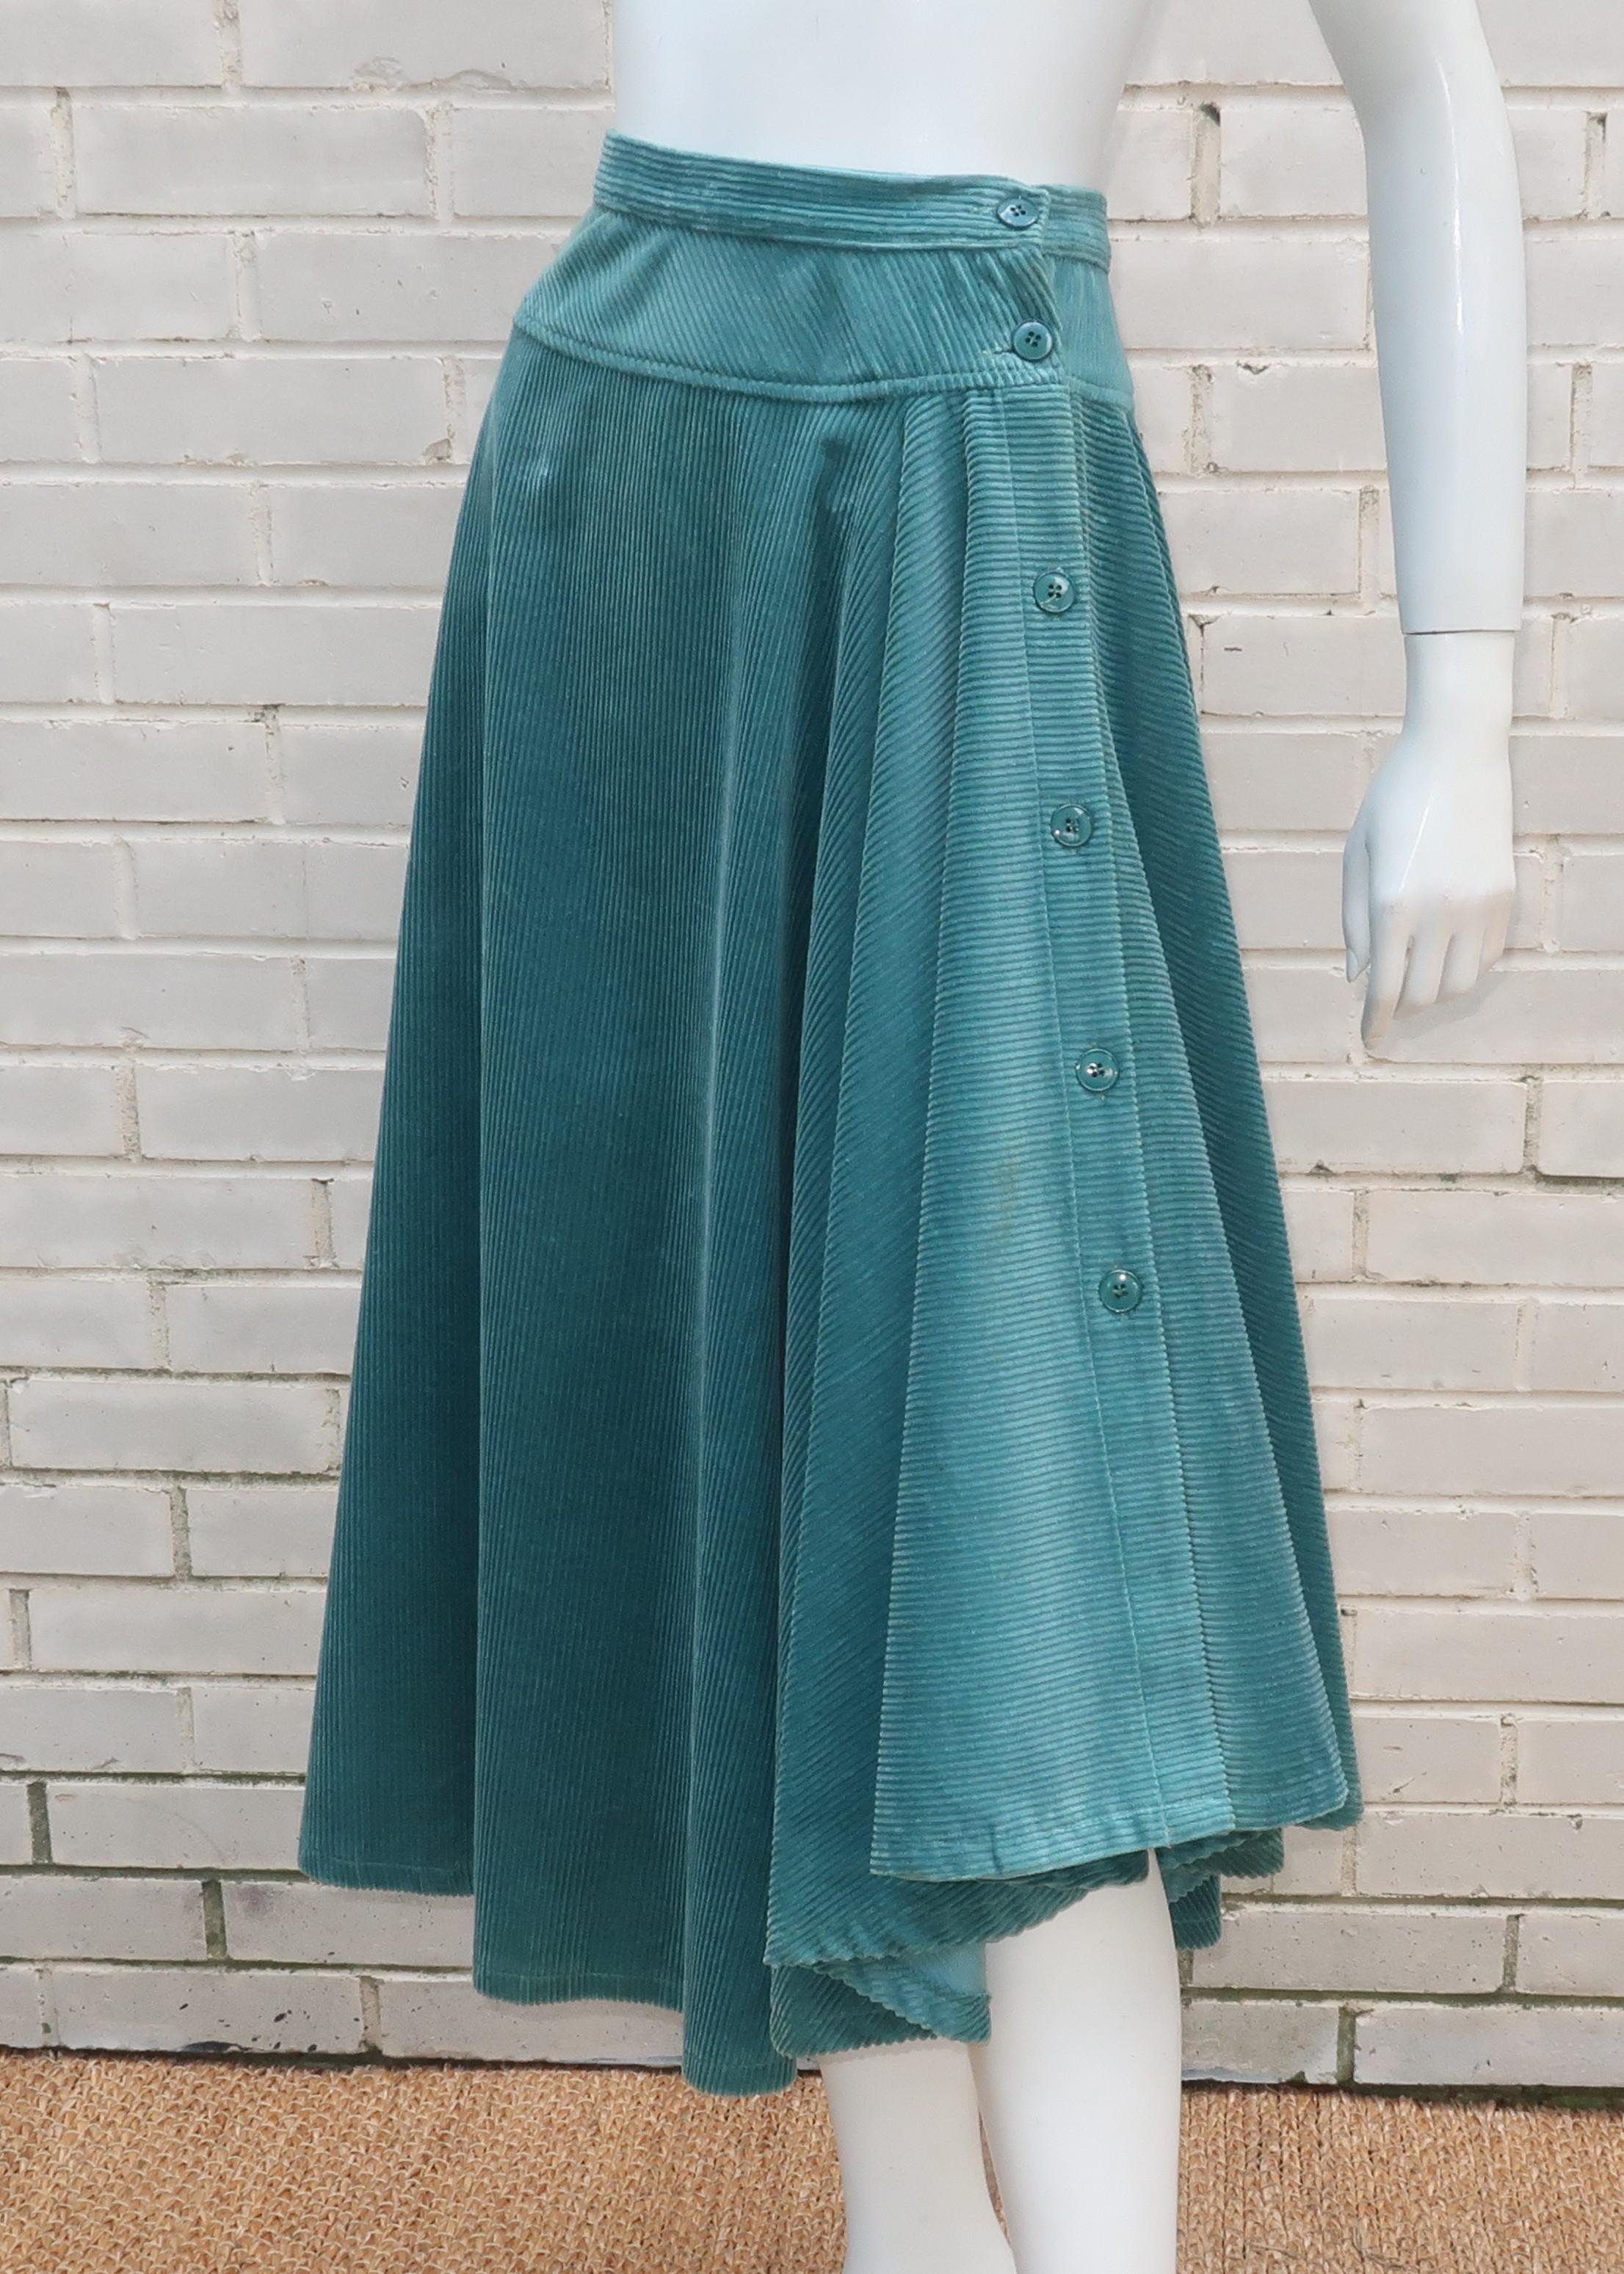 Kenzo Jungle Jap Asymmetrical Corduroy Skirt, 1970’s In Good Condition For Sale In Atlanta, GA